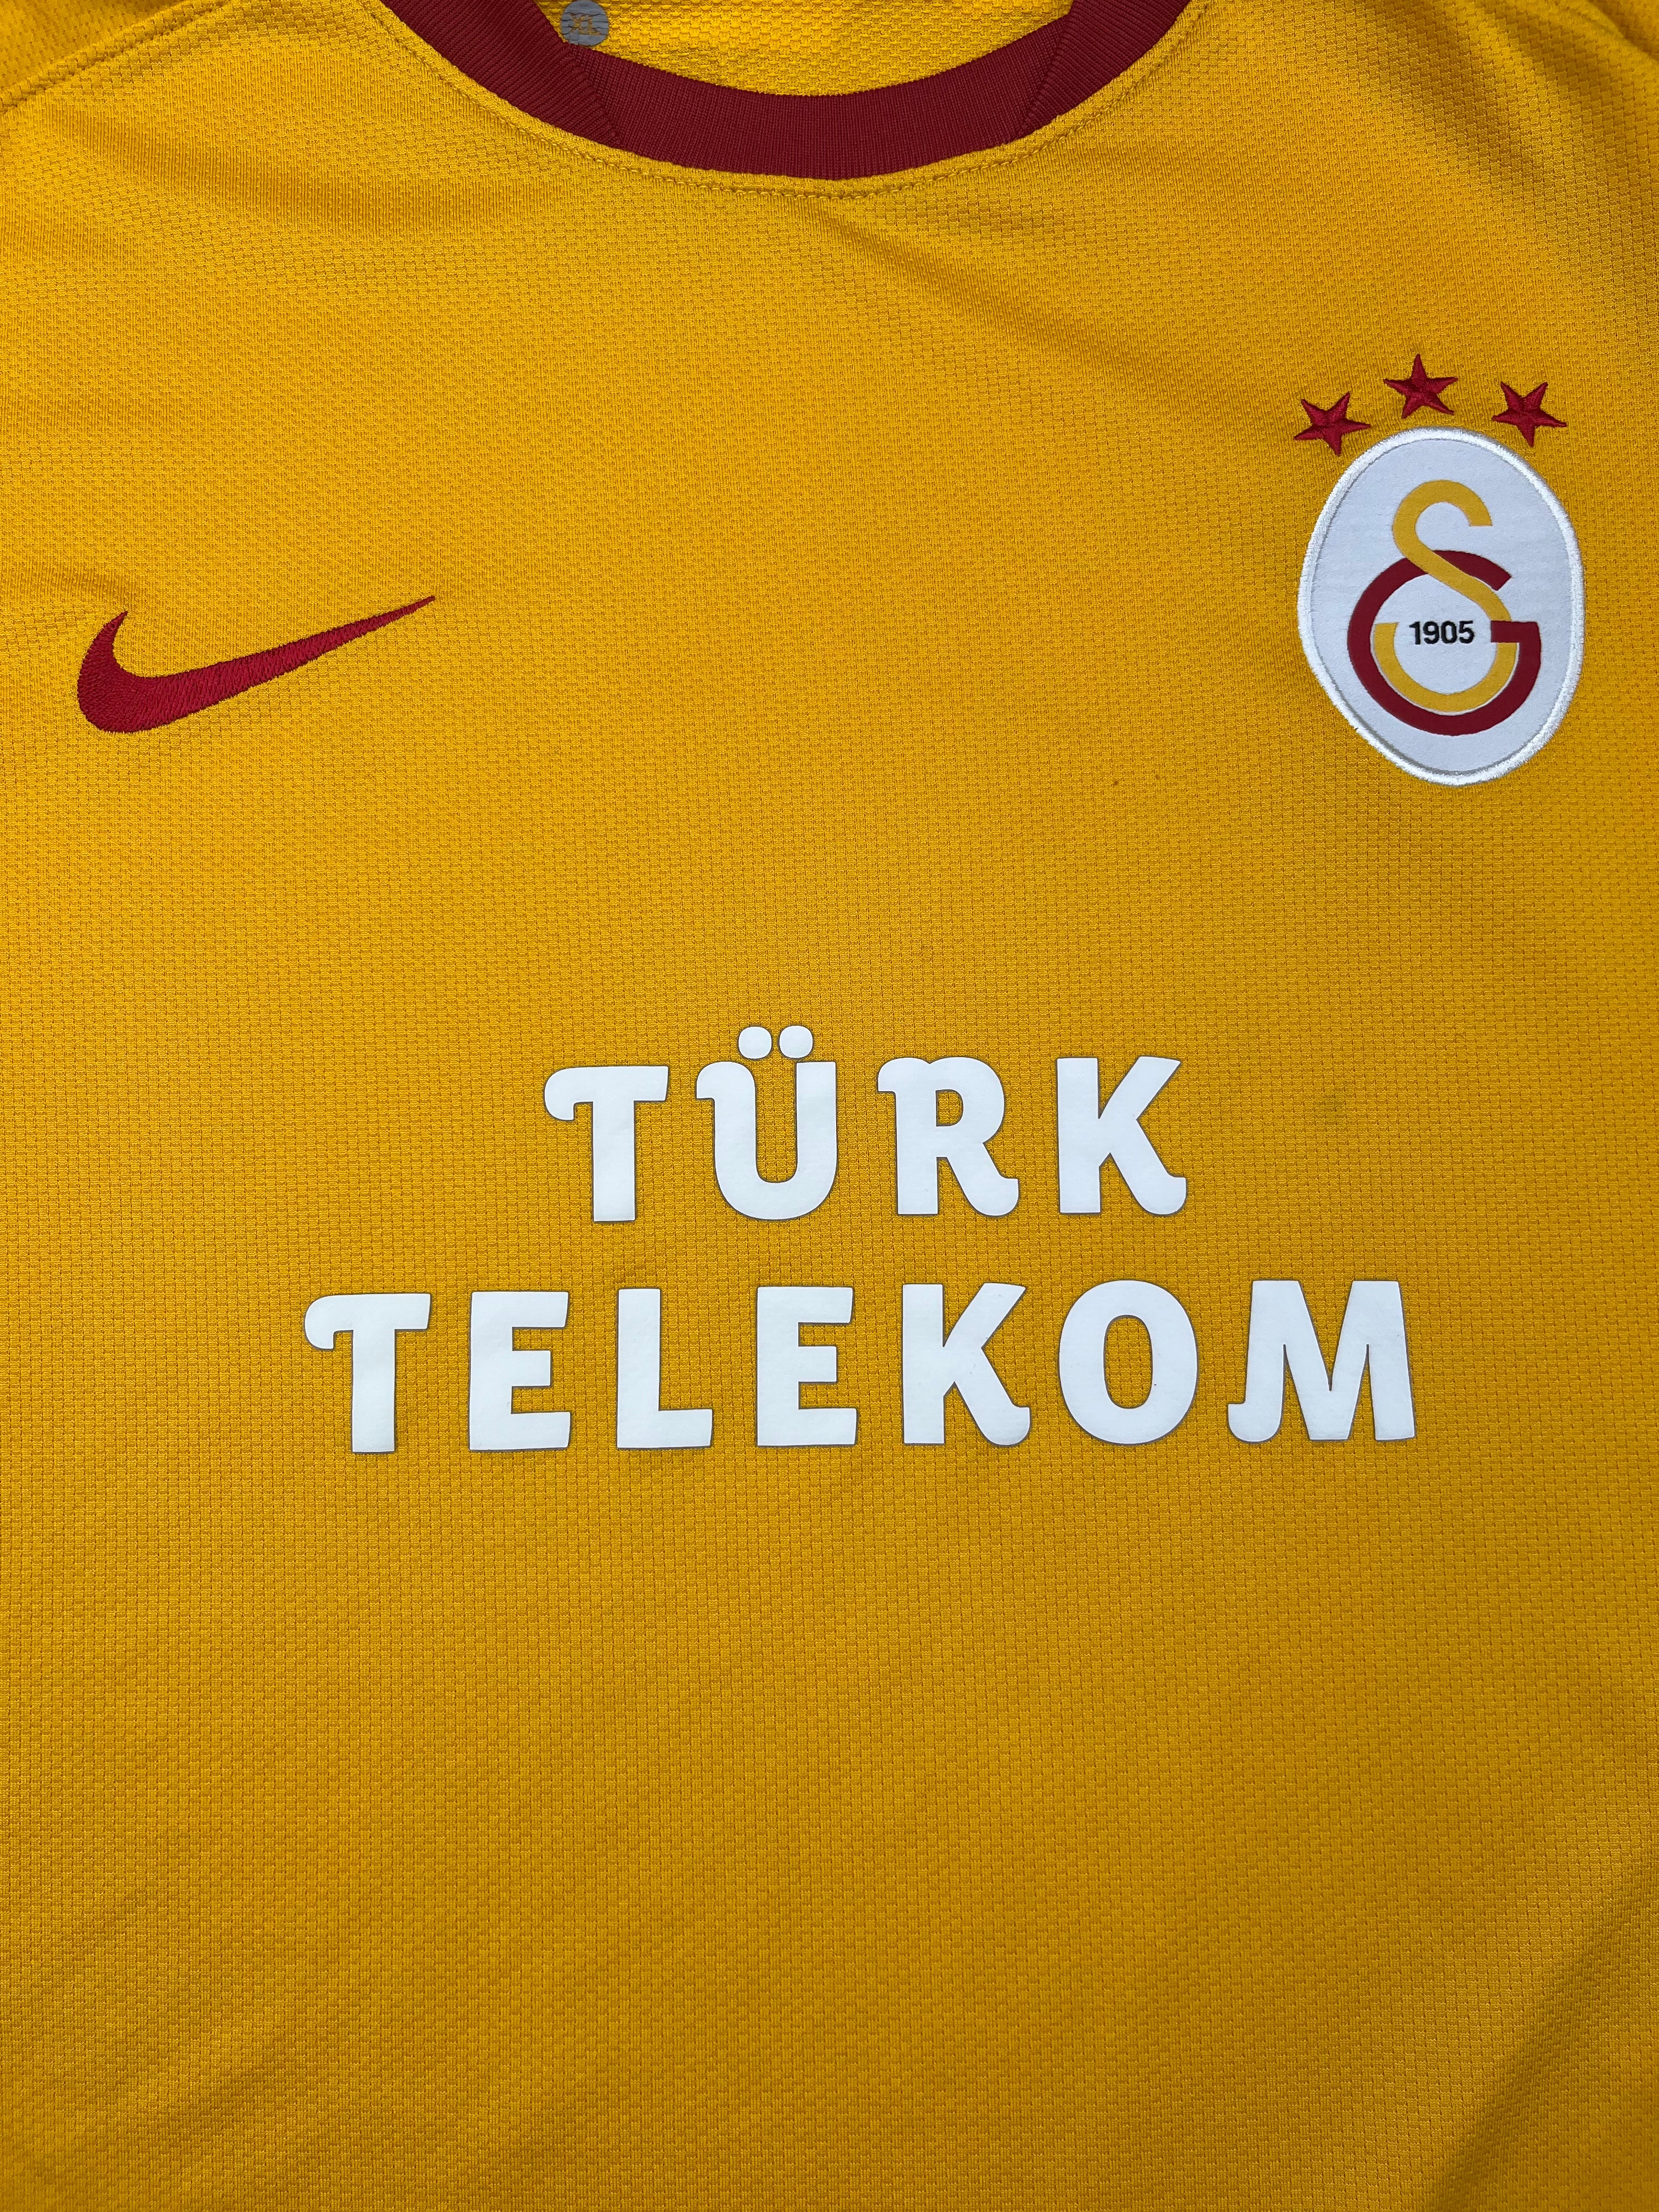 Troisième maillot Galatasaray 2011/12 (XL) 7,5/10